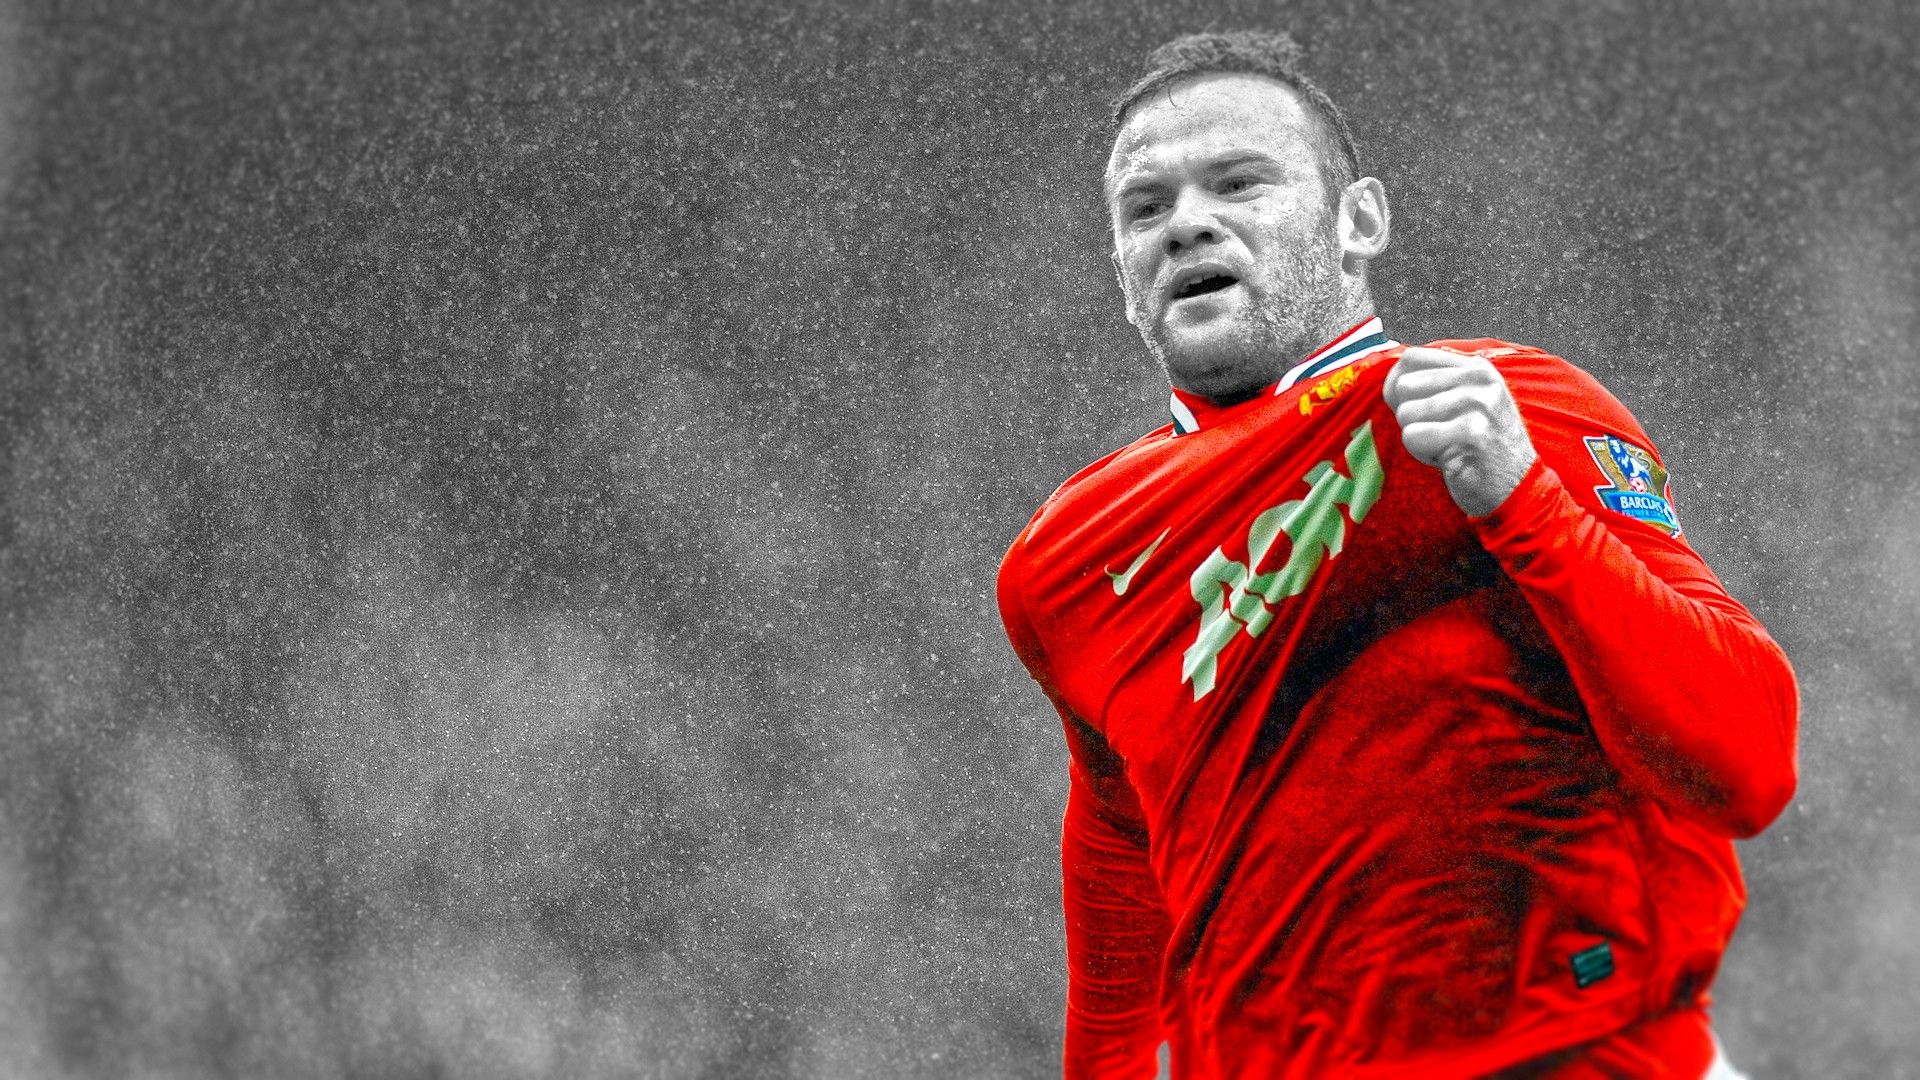 Soccer Wayne Rooney Manchester United Wallpapers Hd Desktop